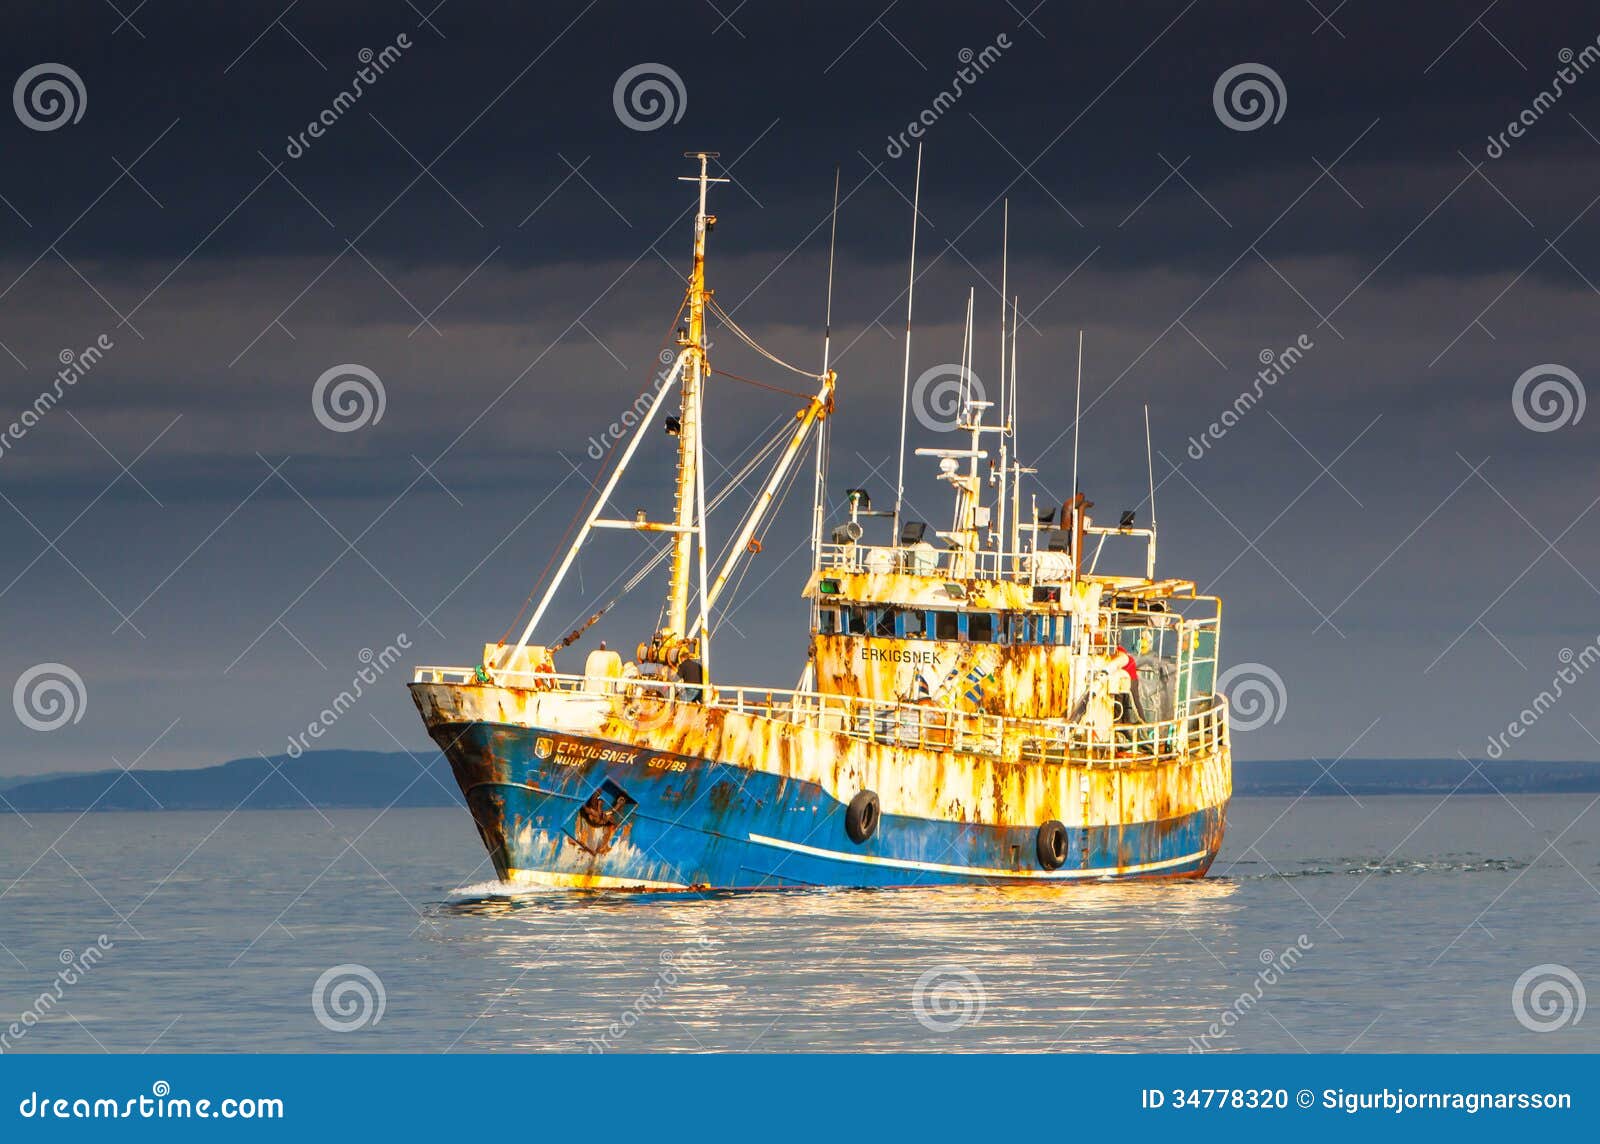 Fishing Boat Editorial Image - Image: 34778320